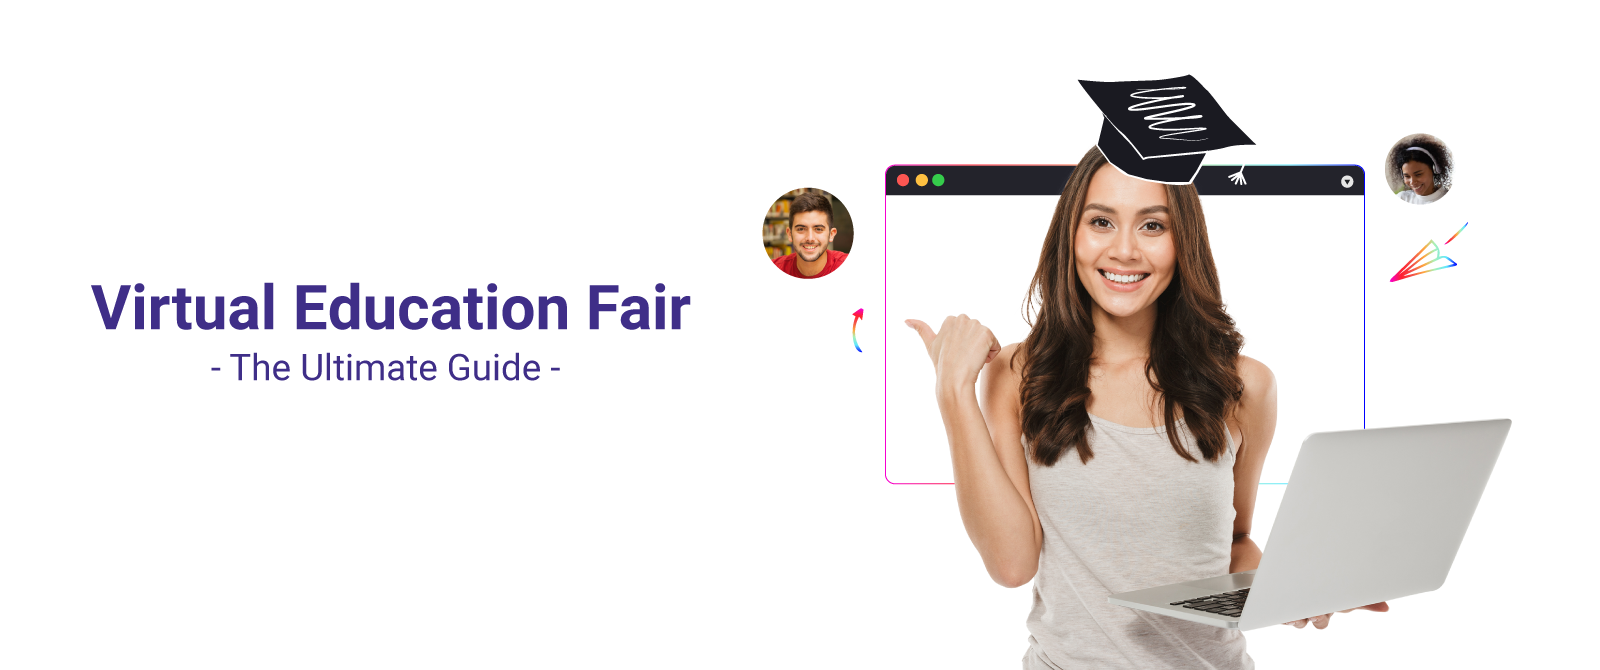 Virtual Education Fair – The Ultimate Guide